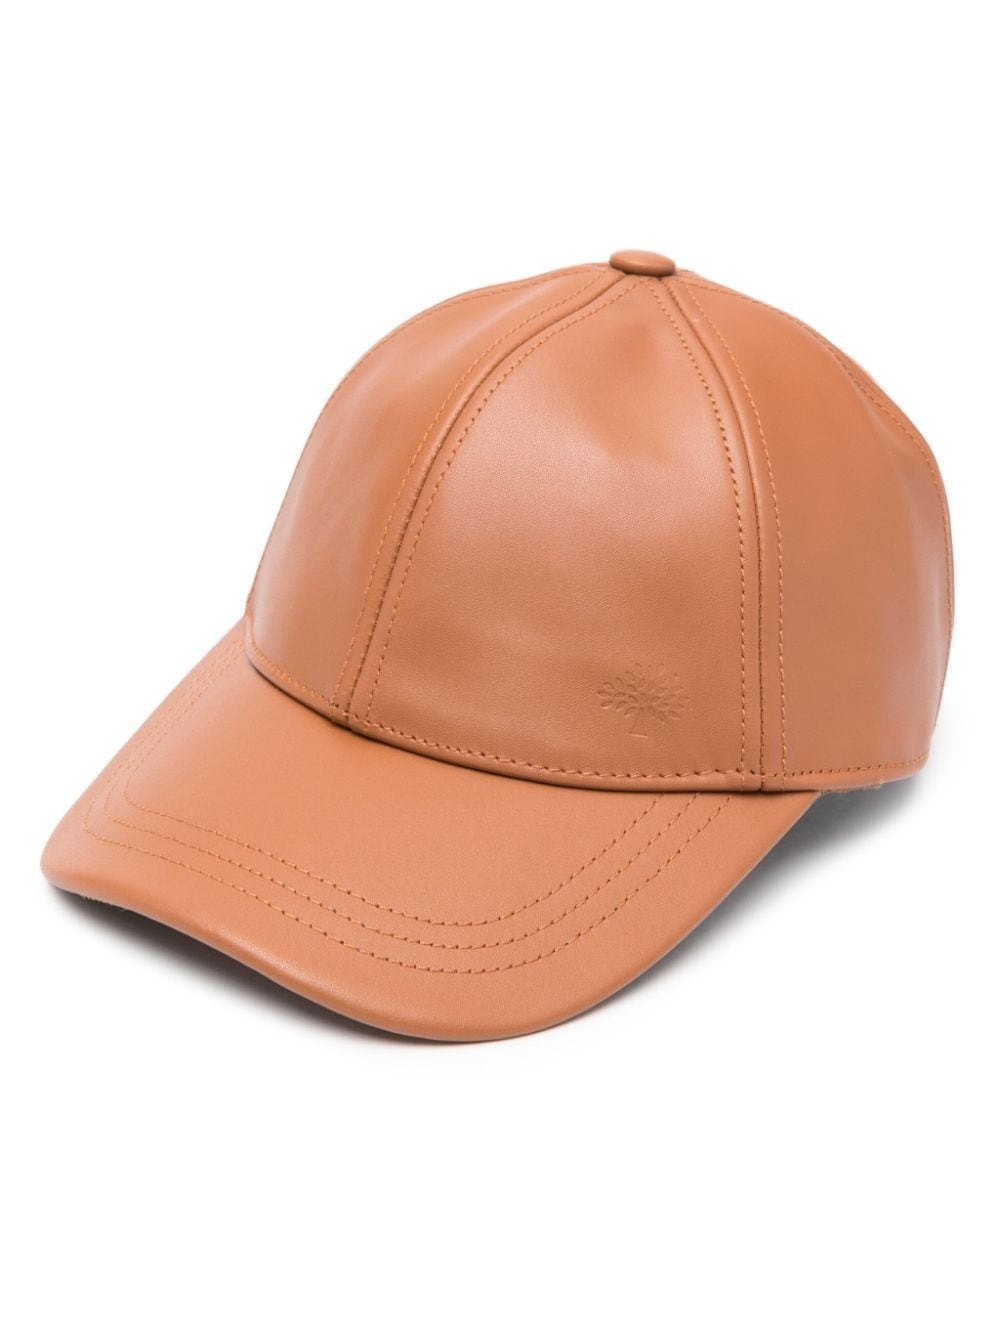 leather baseball cap - 1